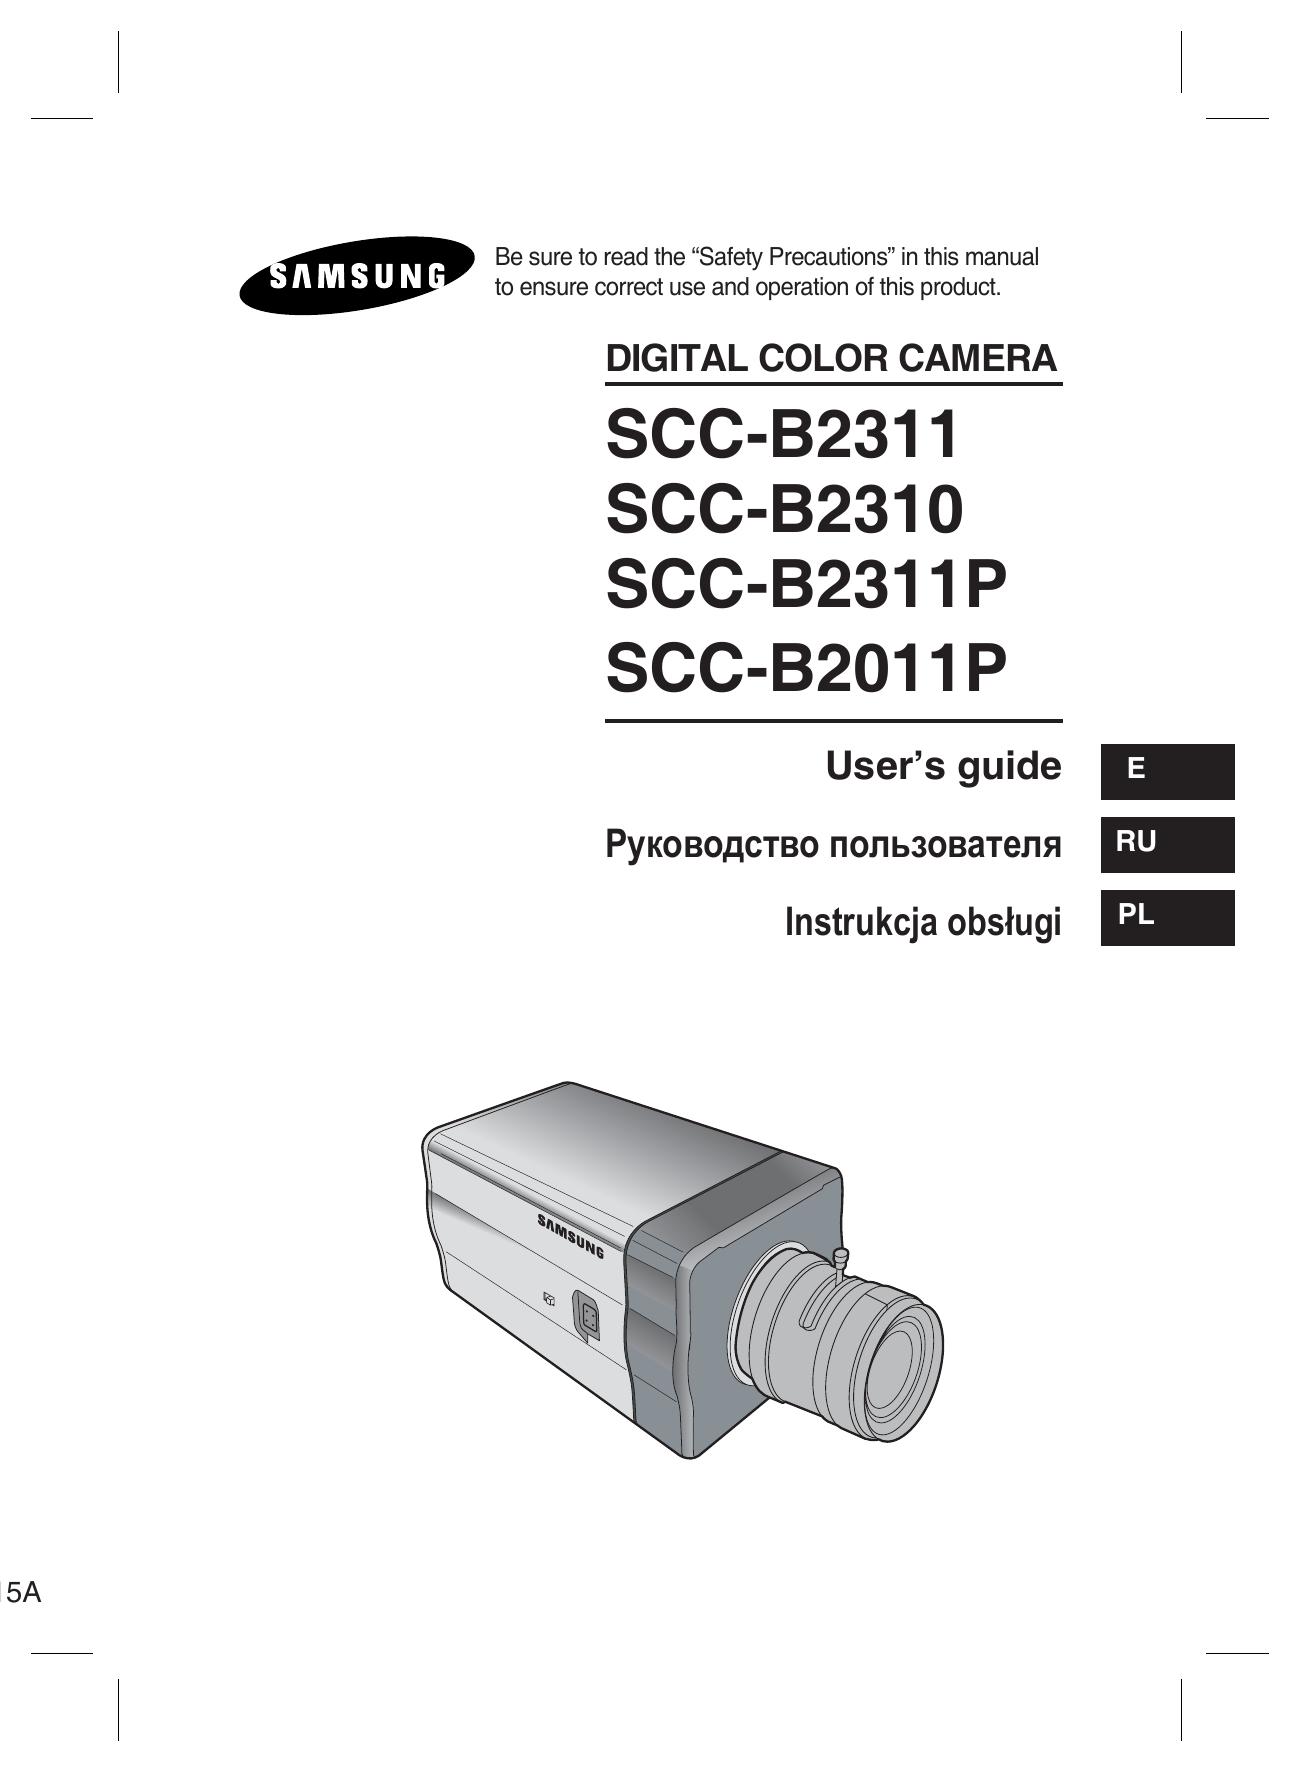 Samsung SCC-B2311P Security Camera User Manual